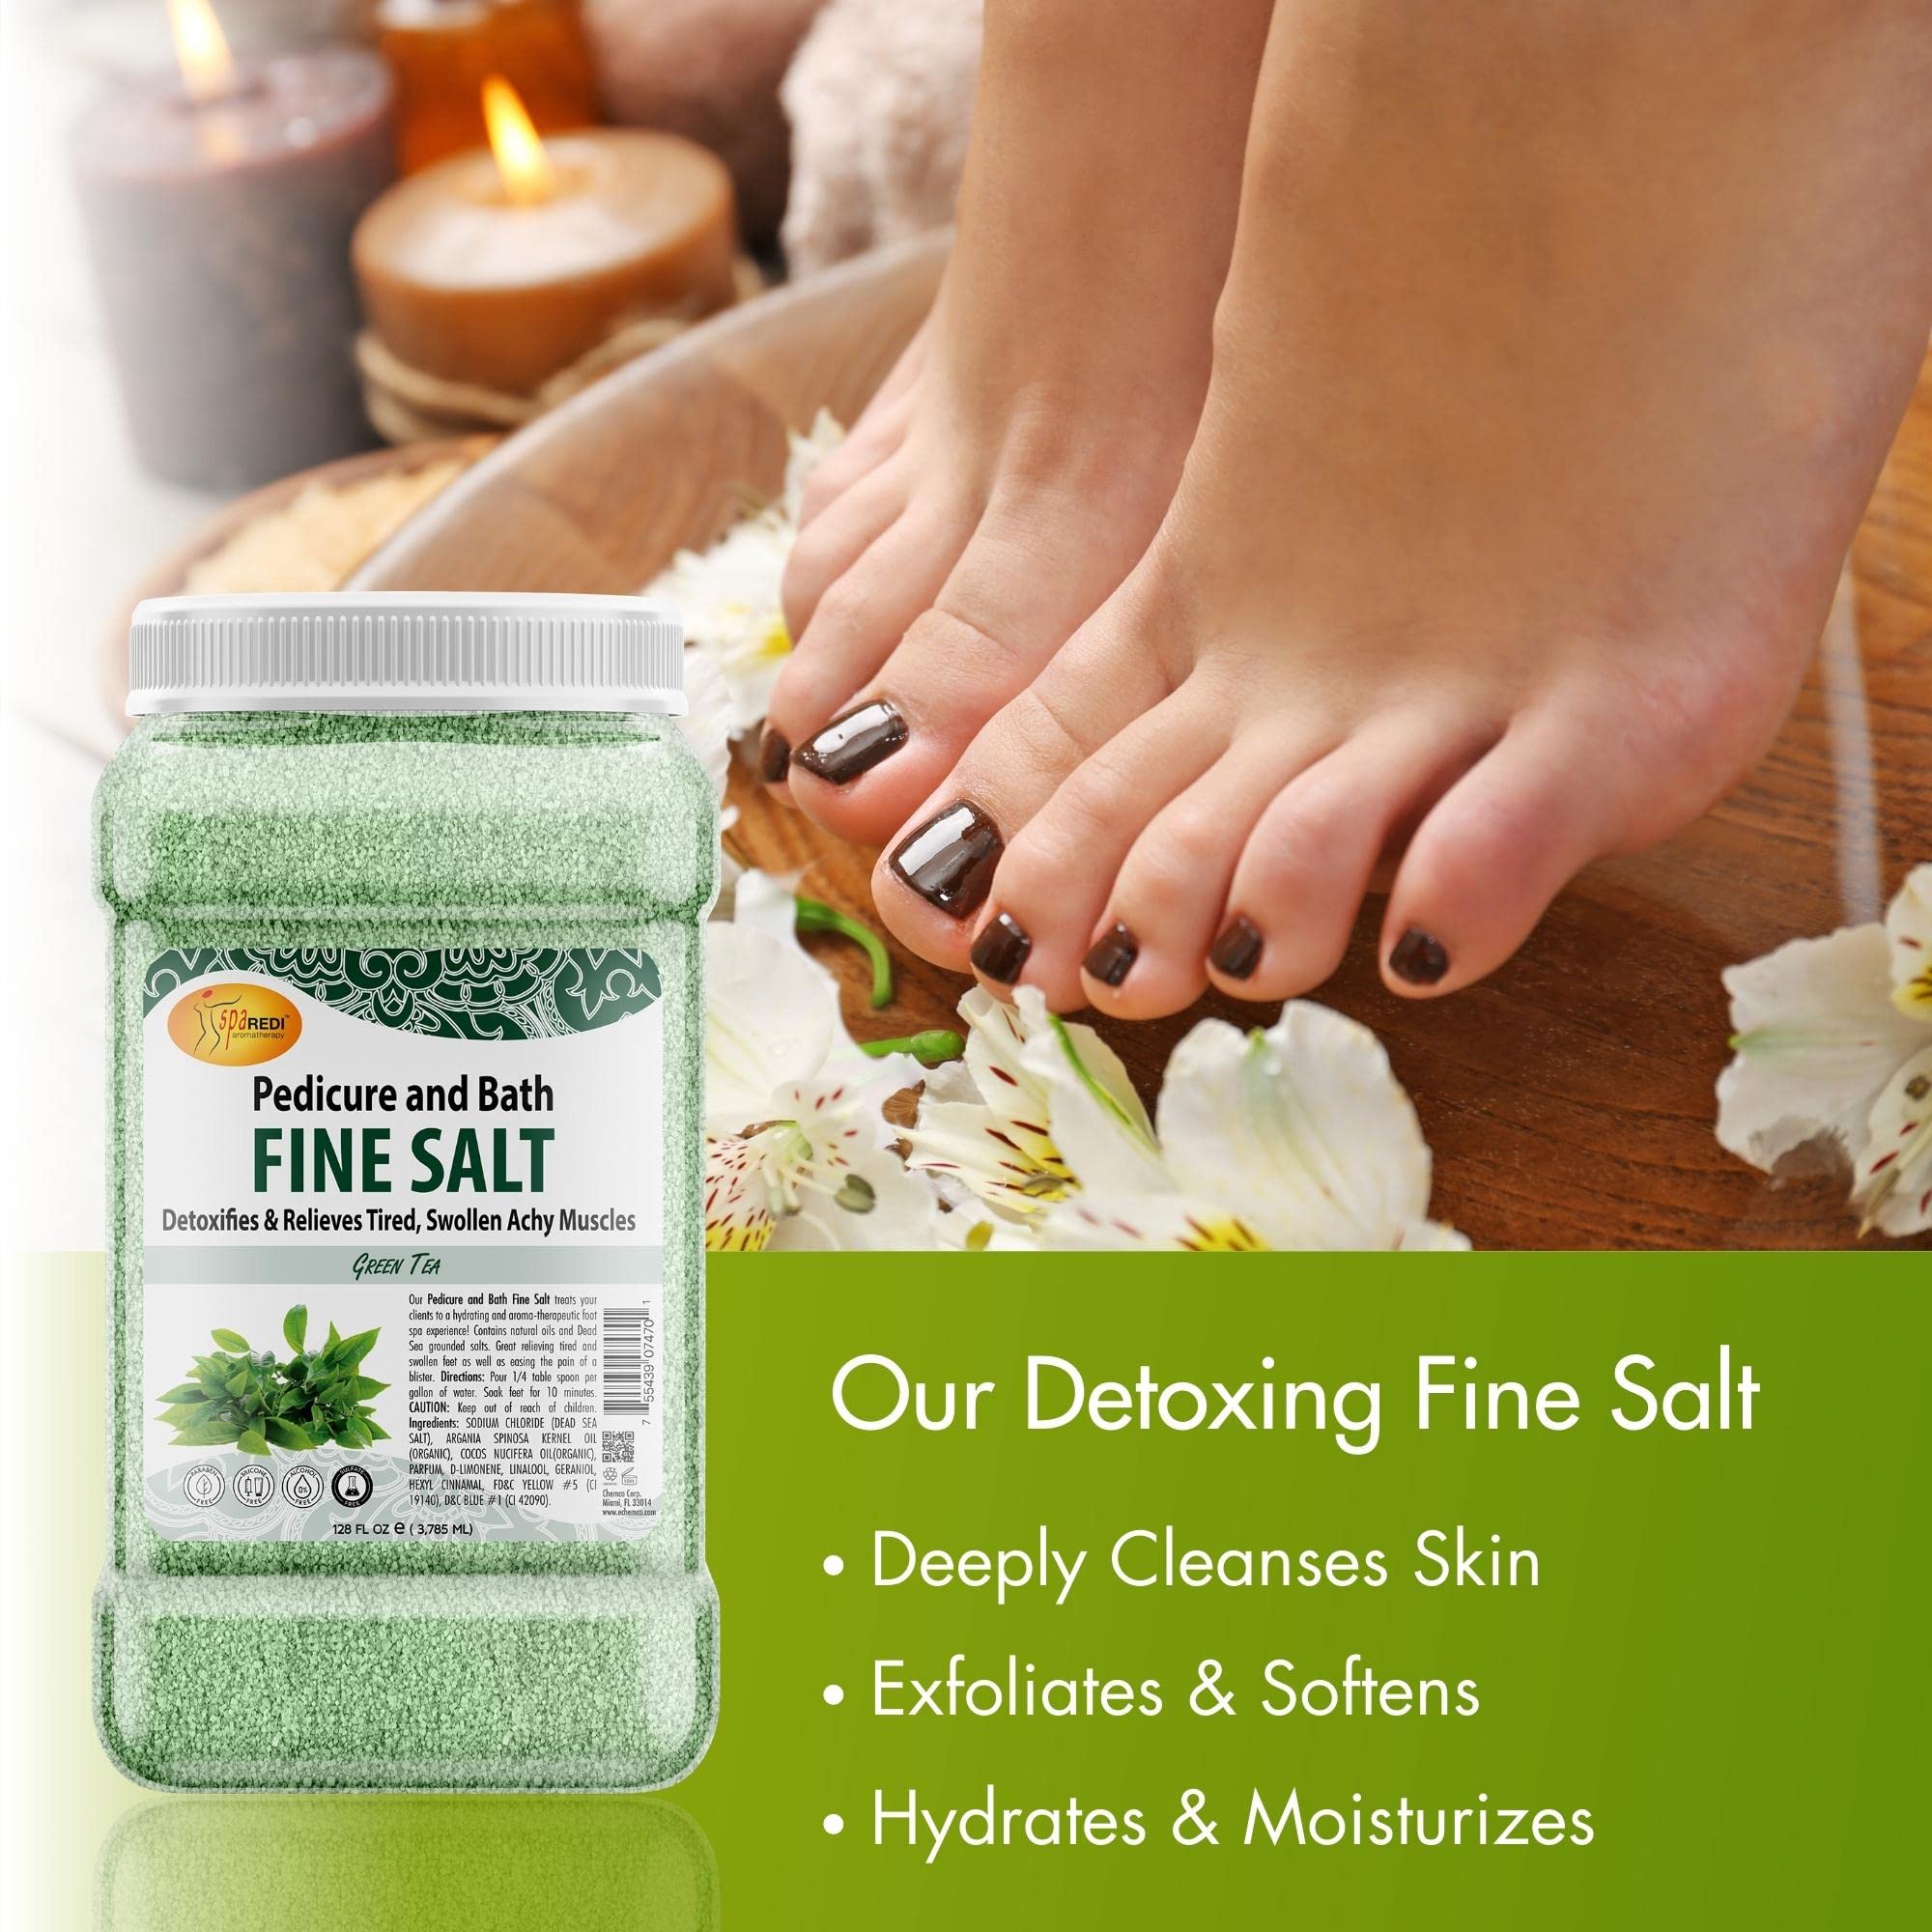 SPA REDI - Detox Foot Soak Pedicure and Bath Fine Salt, Green Tea, 128 Oz - Made with Dead Sea Salts, Argan Oil, Coconut Oil, and Essential Oil - Hydrates, Softens and Moisturizes